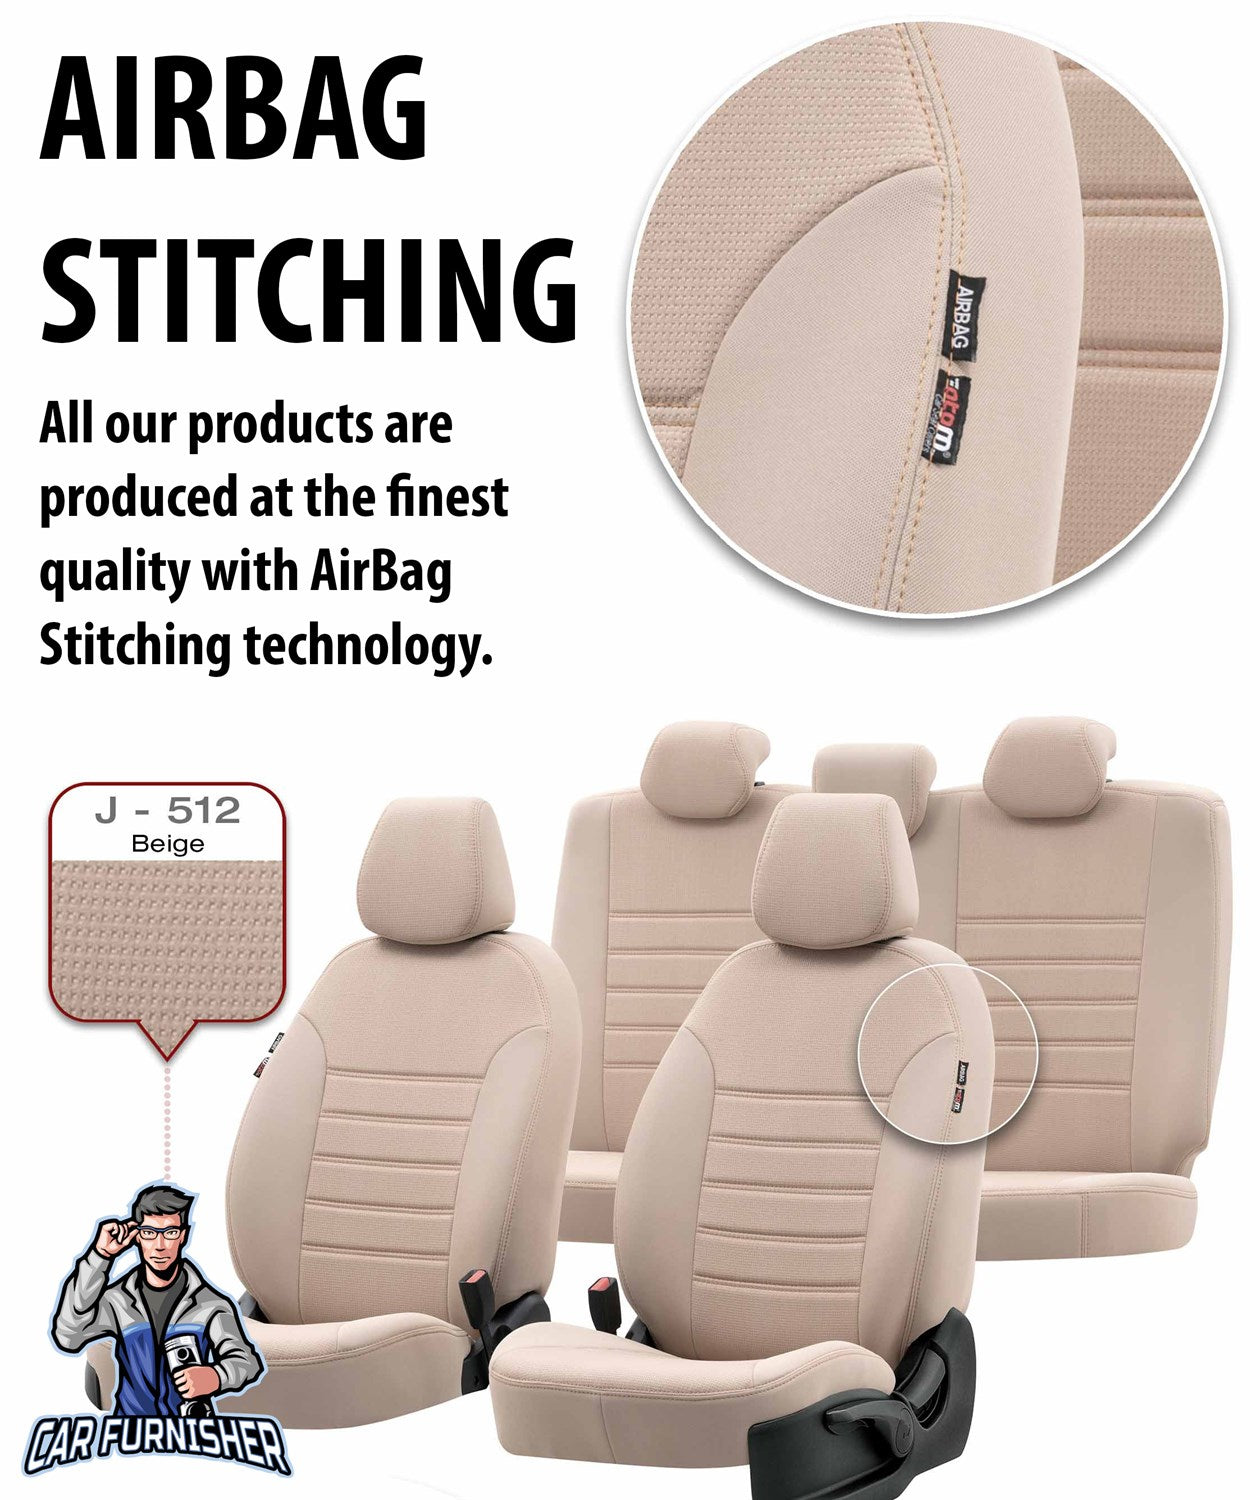 Fiat Marea Seat Covers Original Jacquard Design Beige Jacquard Fabric